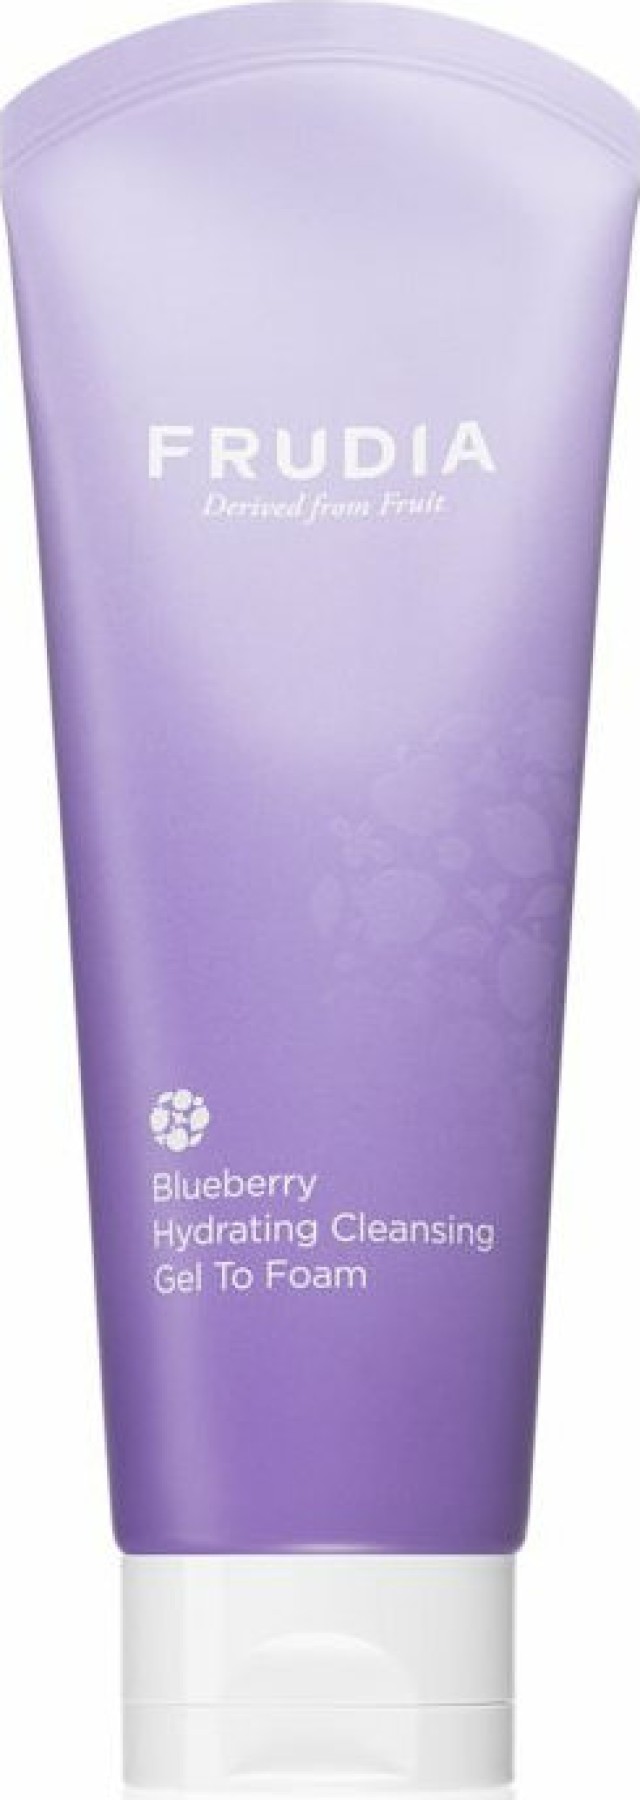 Frudia Blueberry Hydrating Cleansing Gel to Foam Αφρώδες Τζελ Καθαρισμού Προσώπου με Εκχύλισμα Μύρτιλο - Ενυδάτωση 145ml